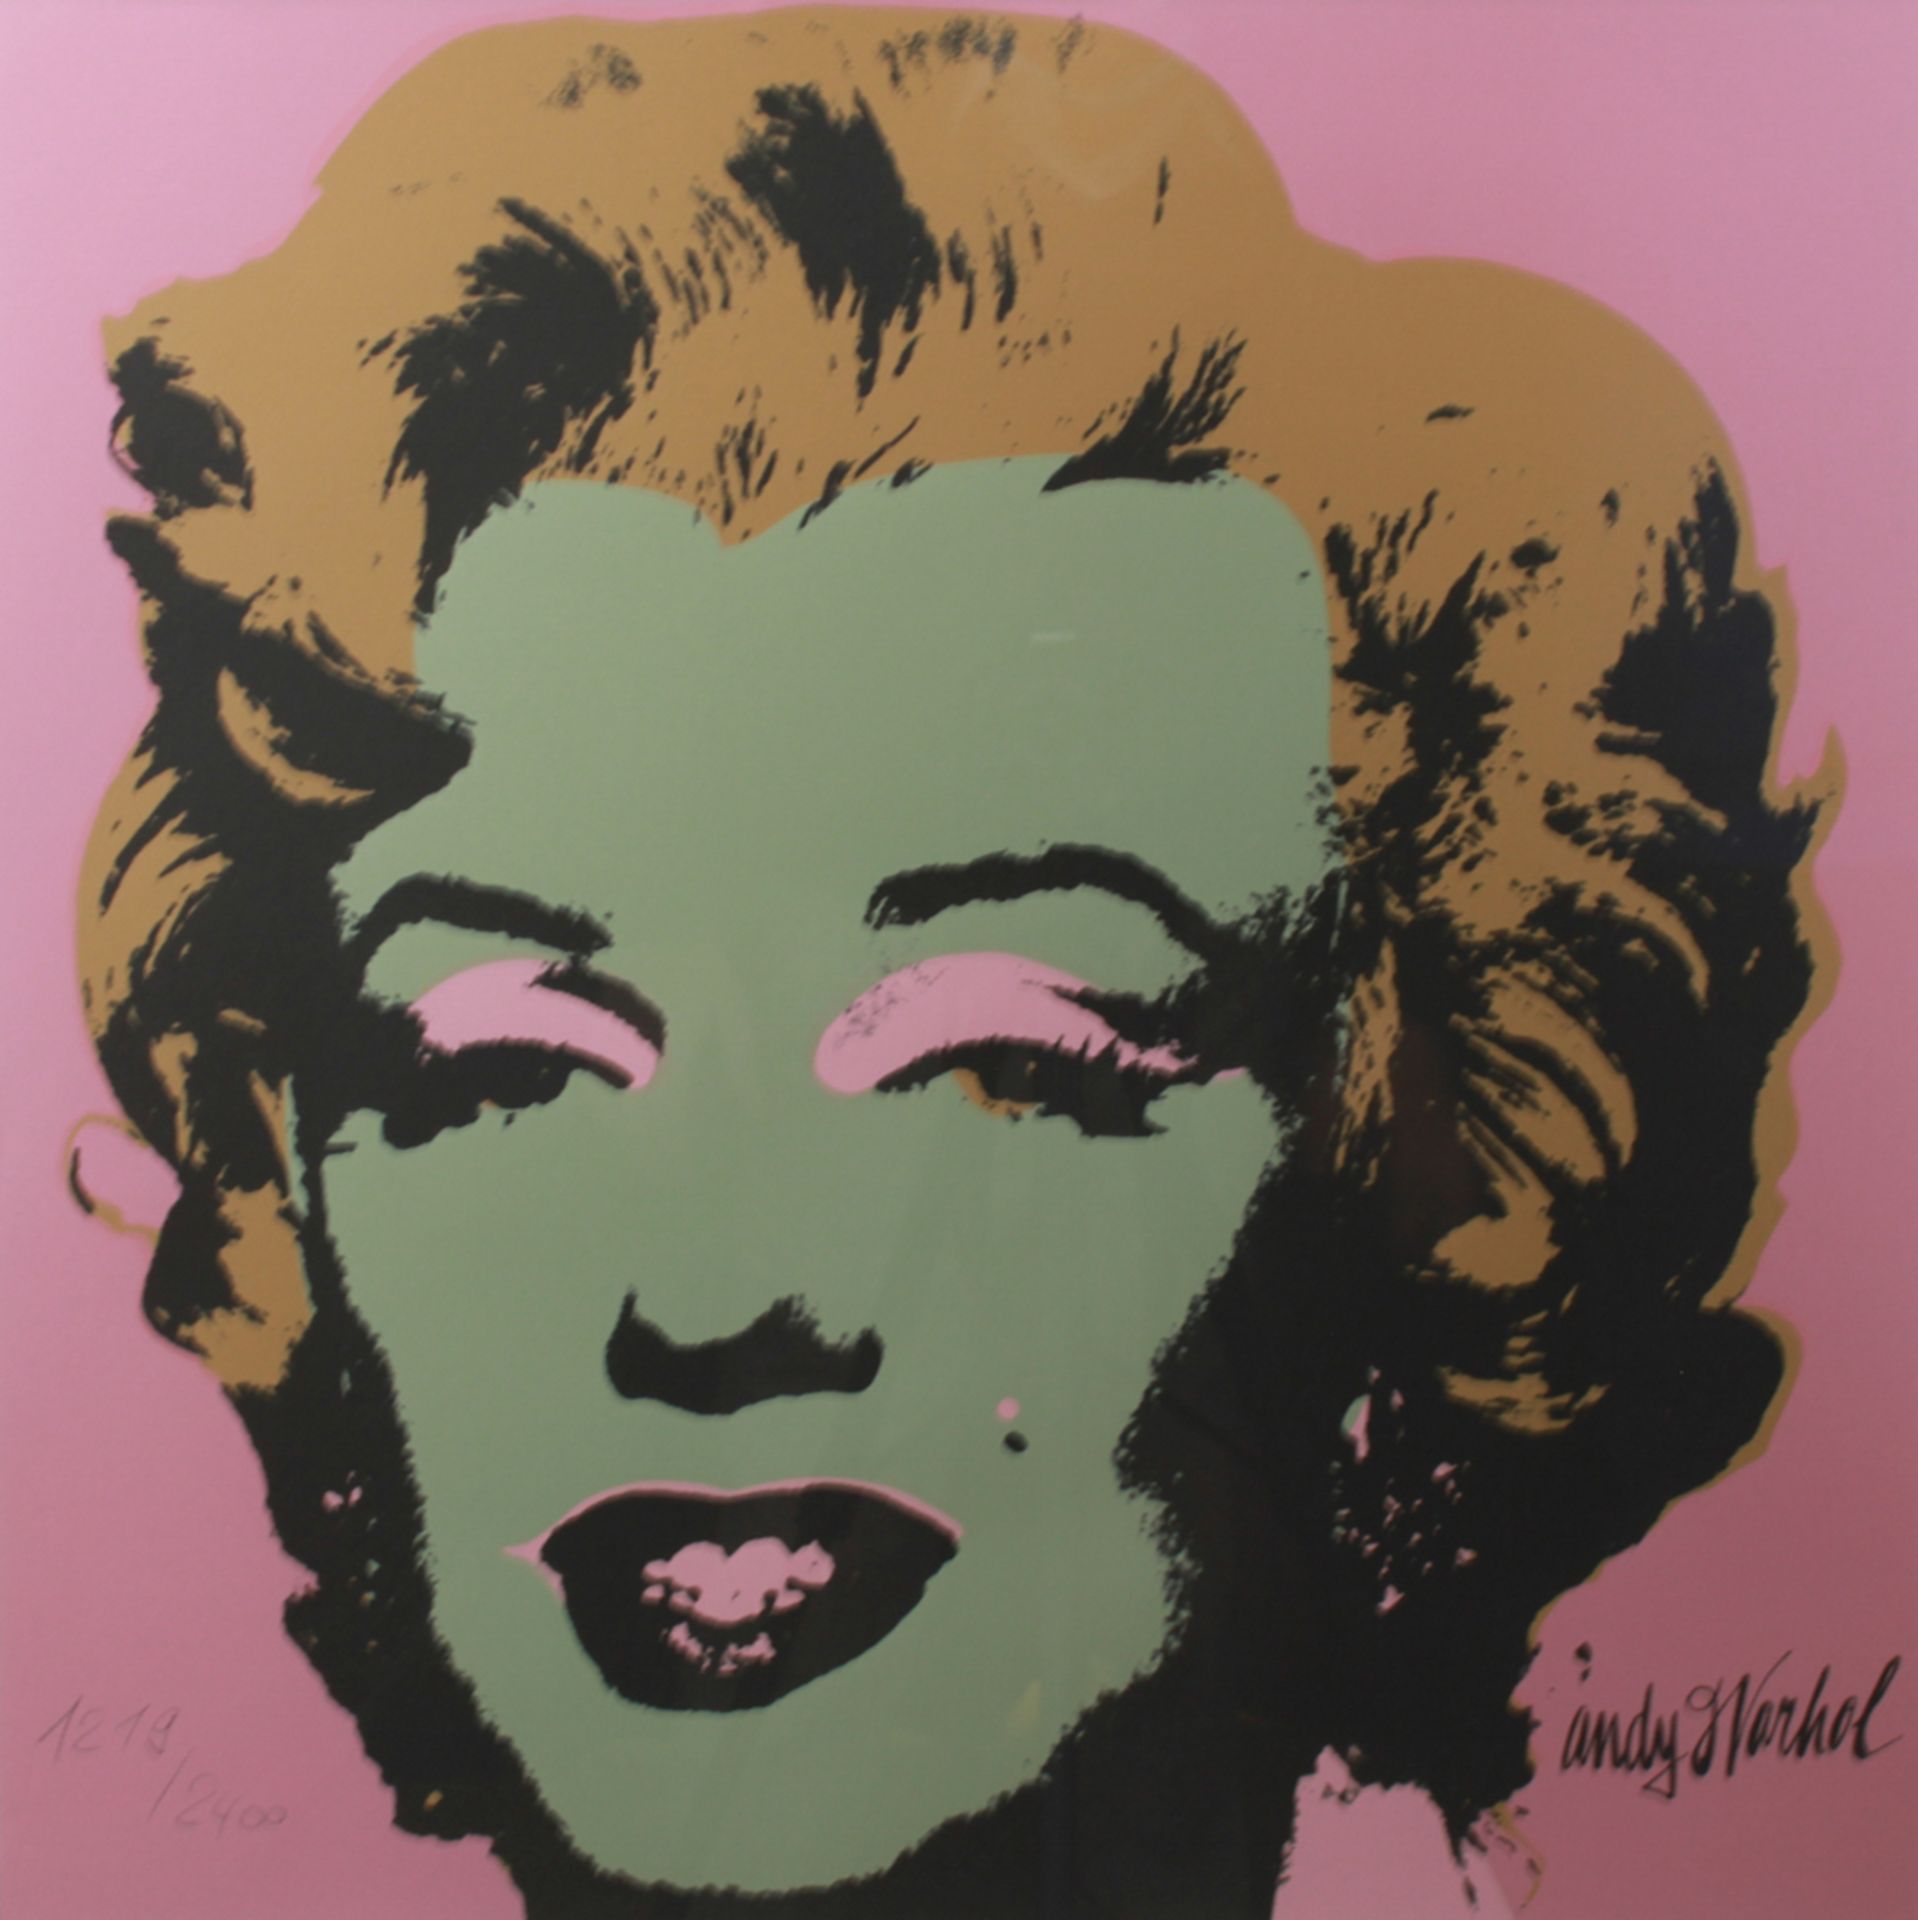 Andy Warhol (1928 - 1987) - Image 5 of 6